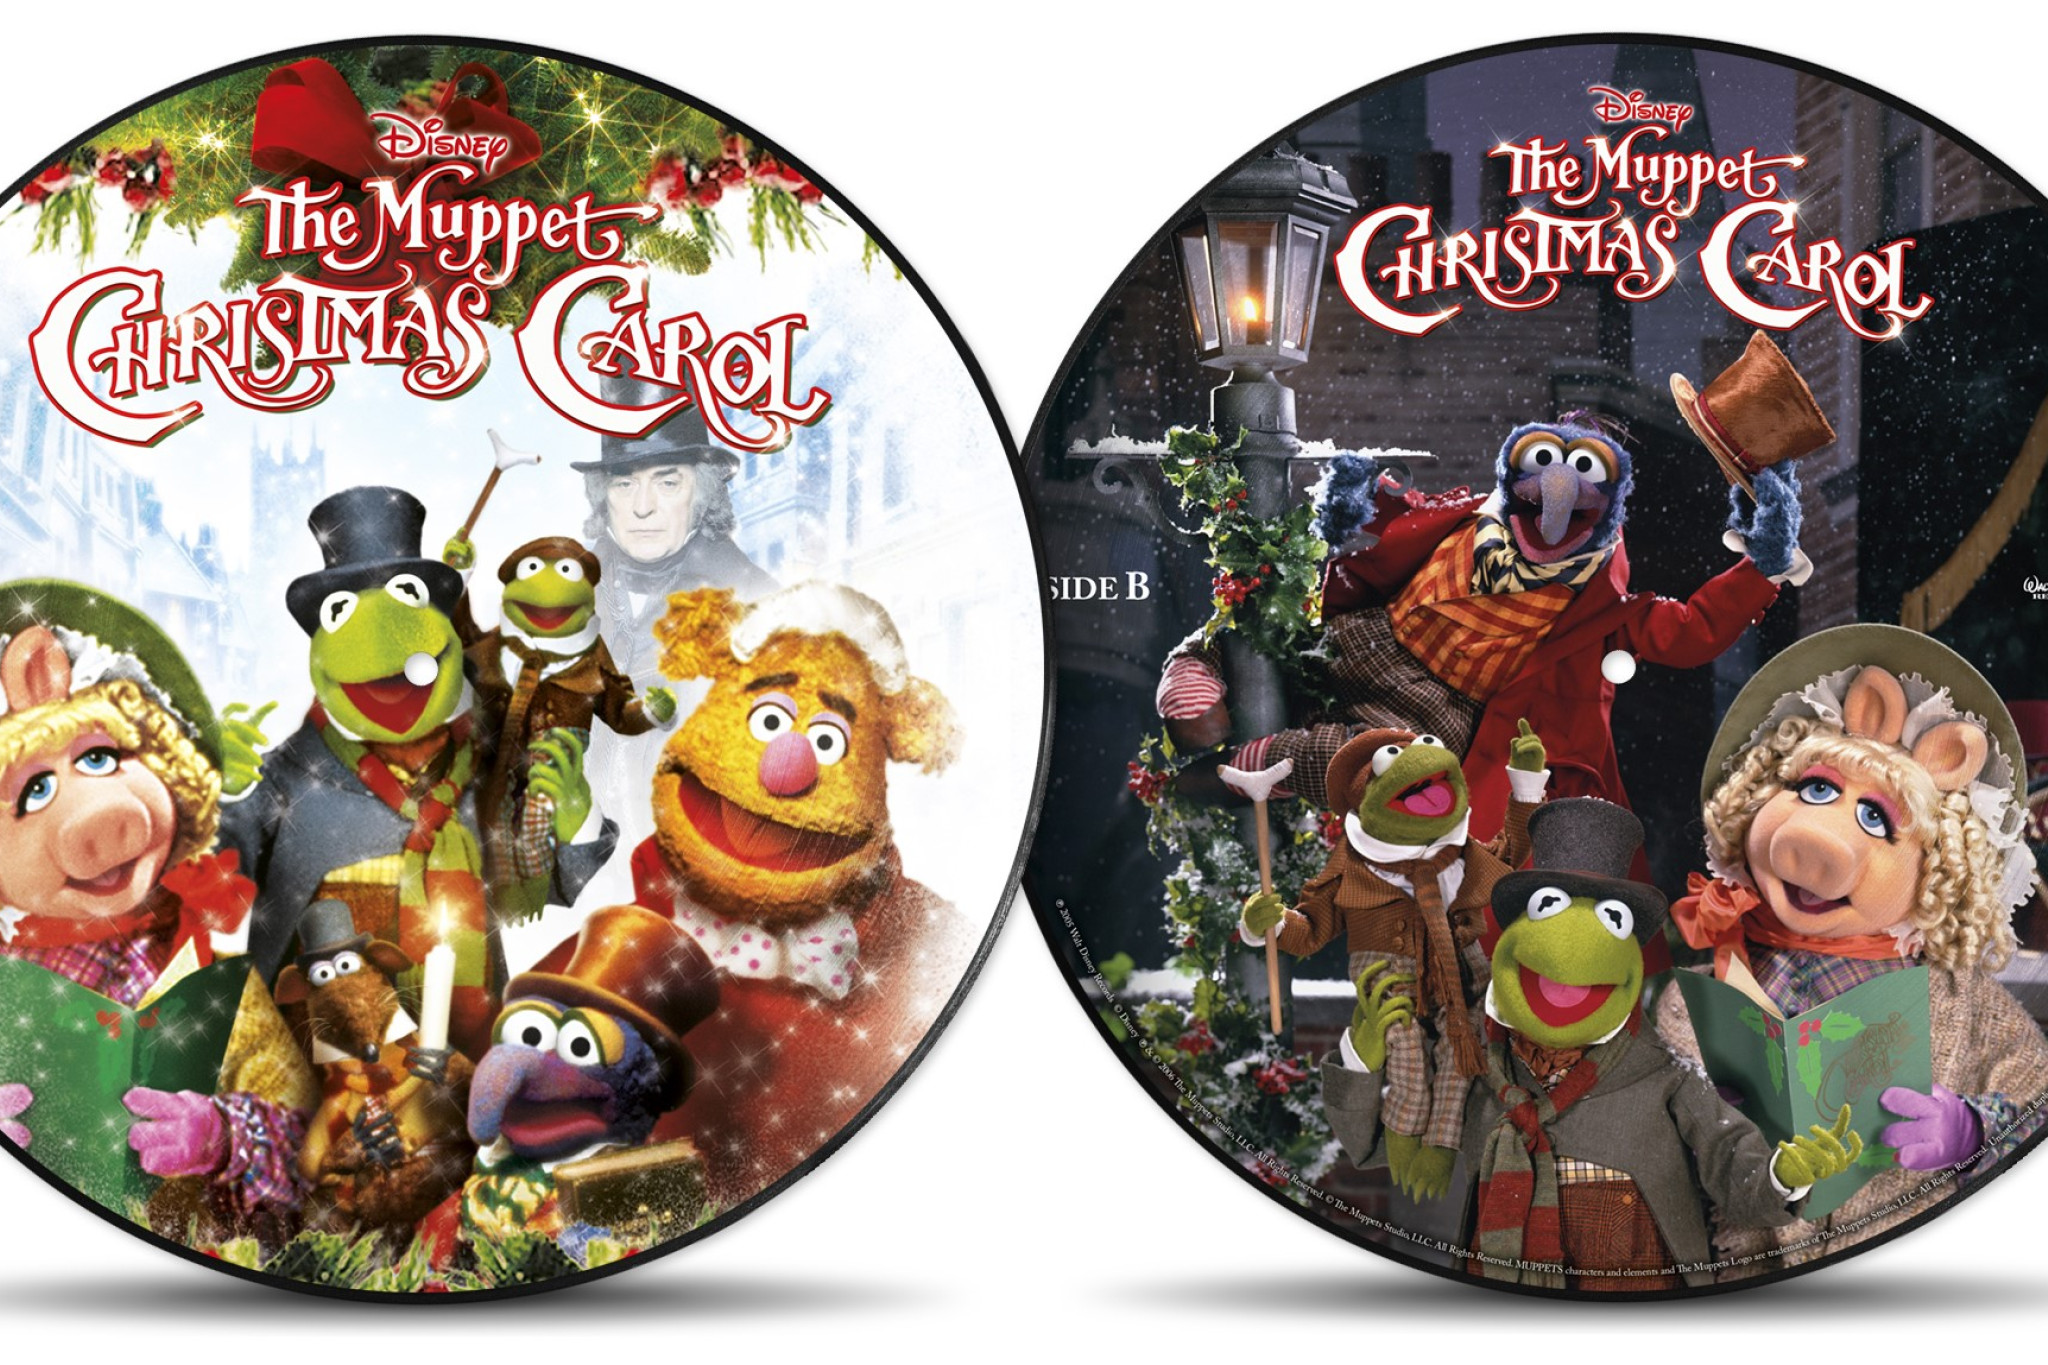 The Muppet Christmas Carol als limitierte Vinyl!